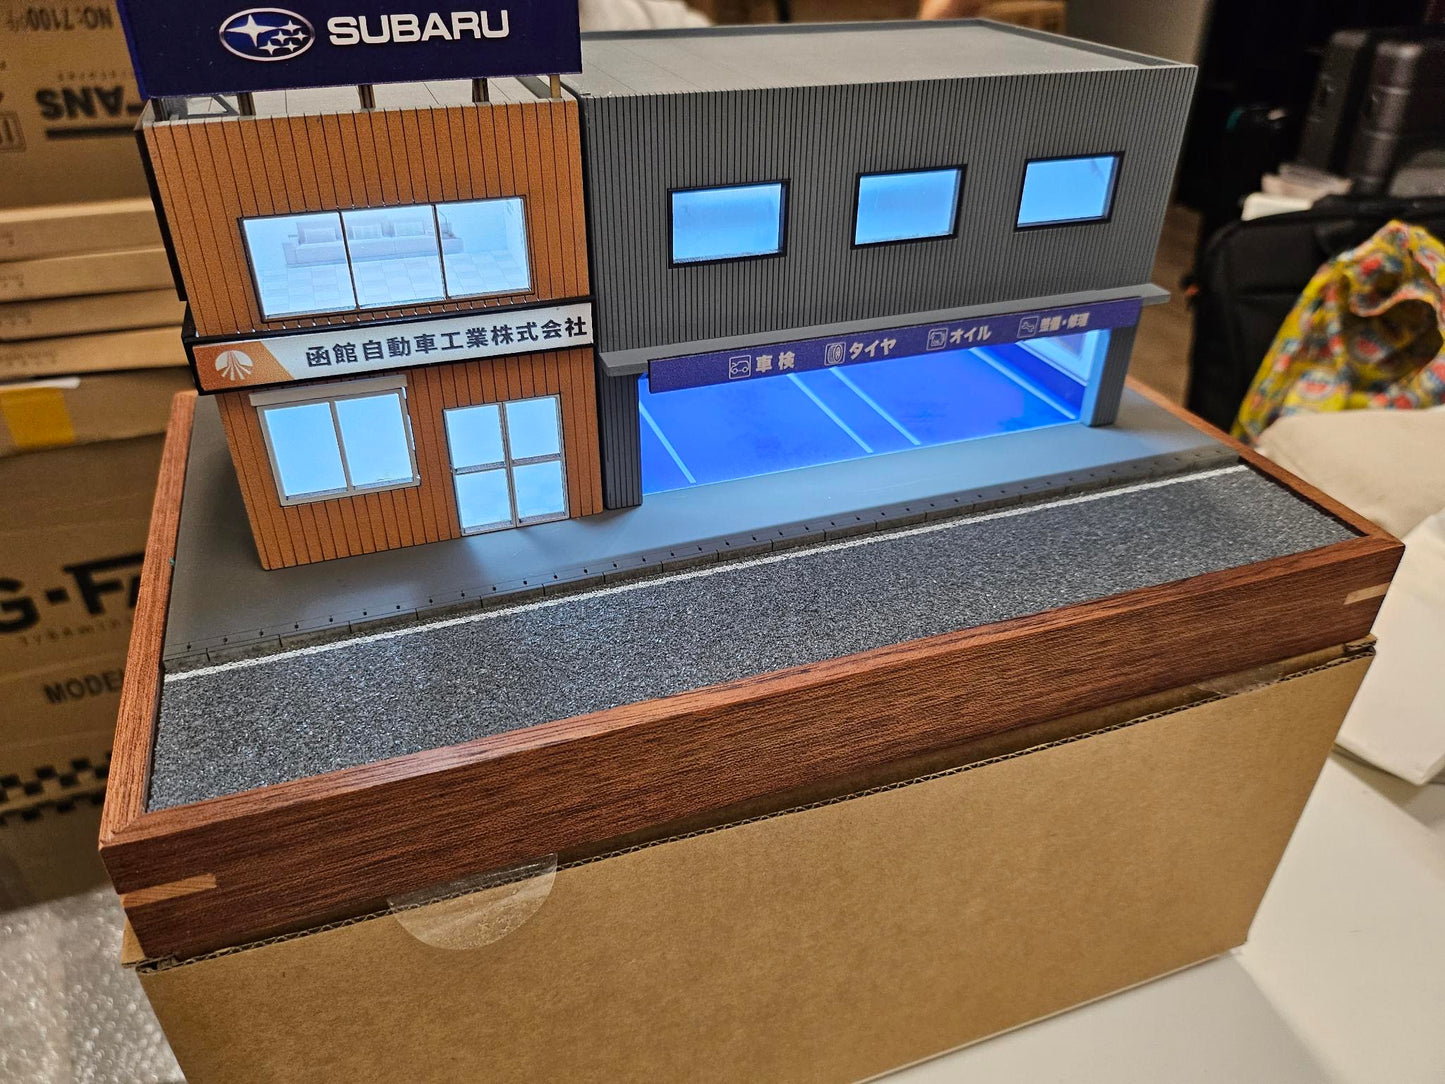 MoreArt 1:64 Scale Hakodate Automobile Industry Subaru Workshop Diorama Japan